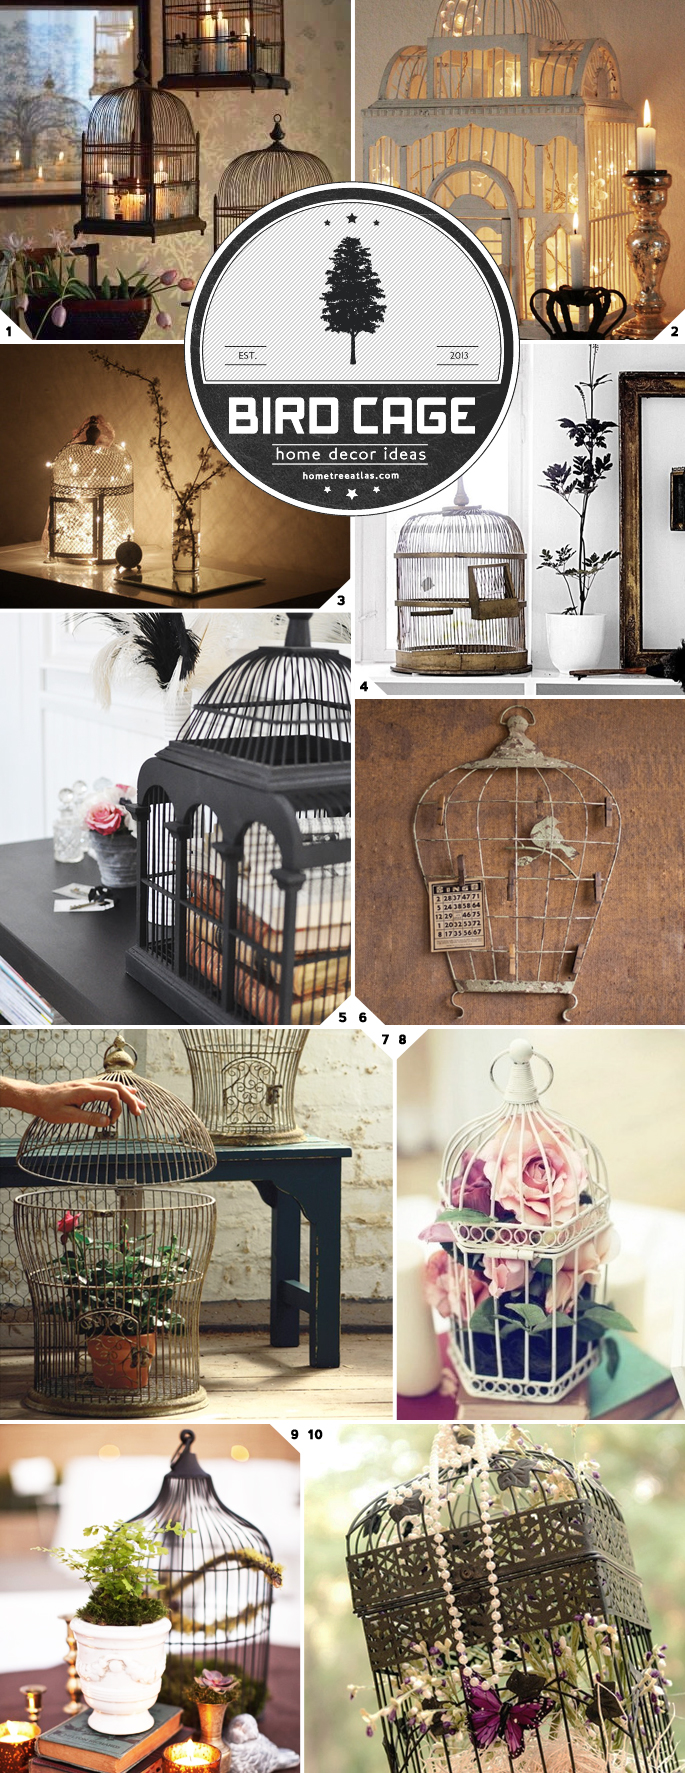 Home Decor Ideas: Using Bird Cages